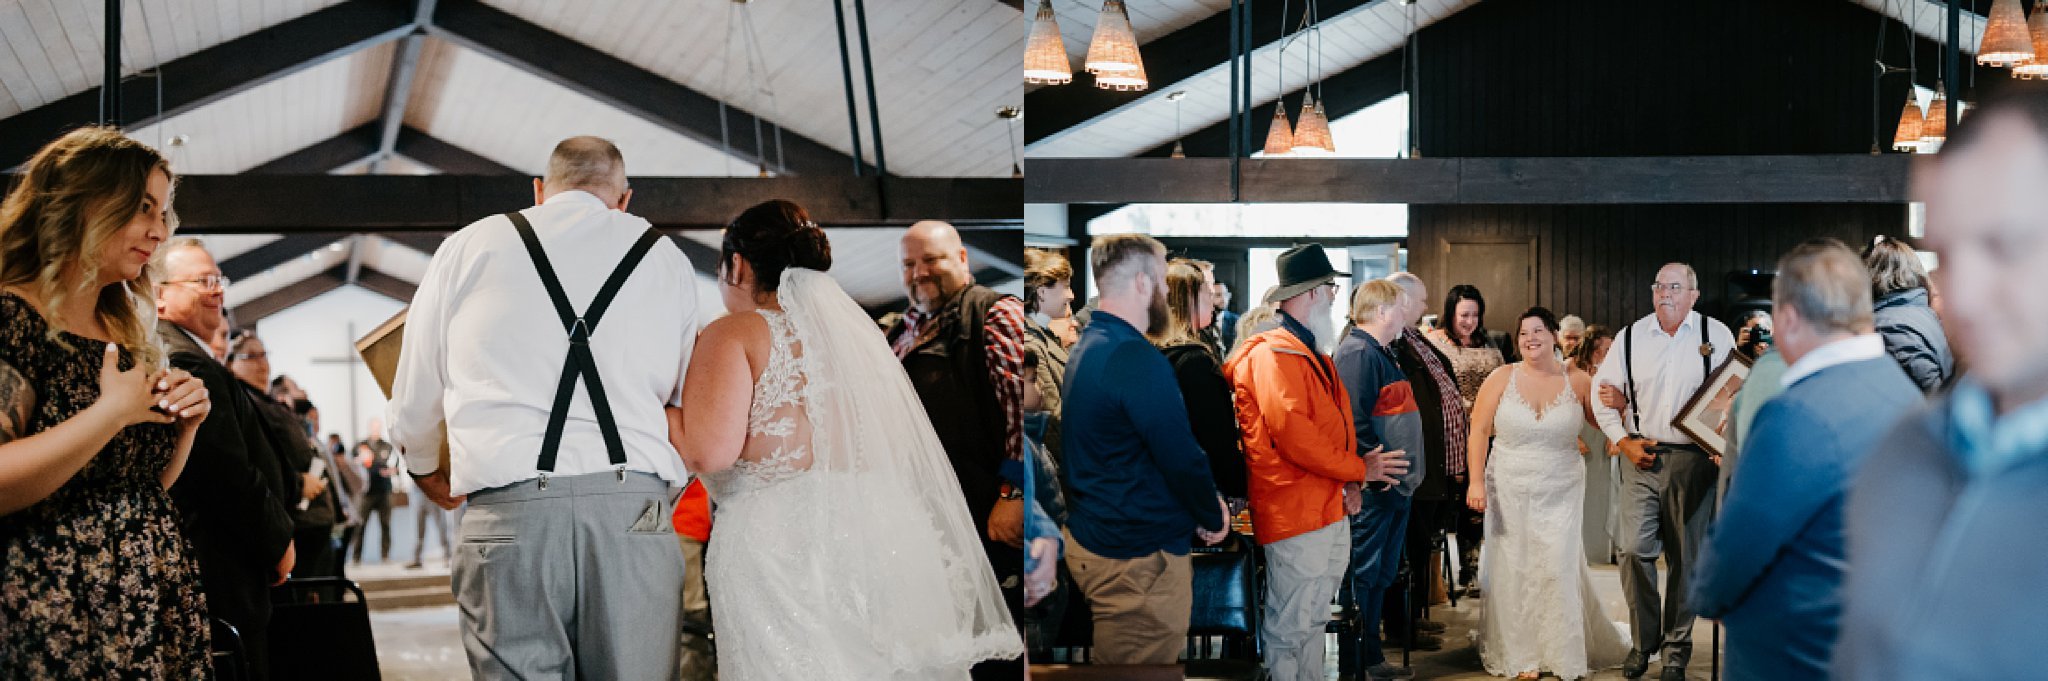 Minnesota wedding ceremony